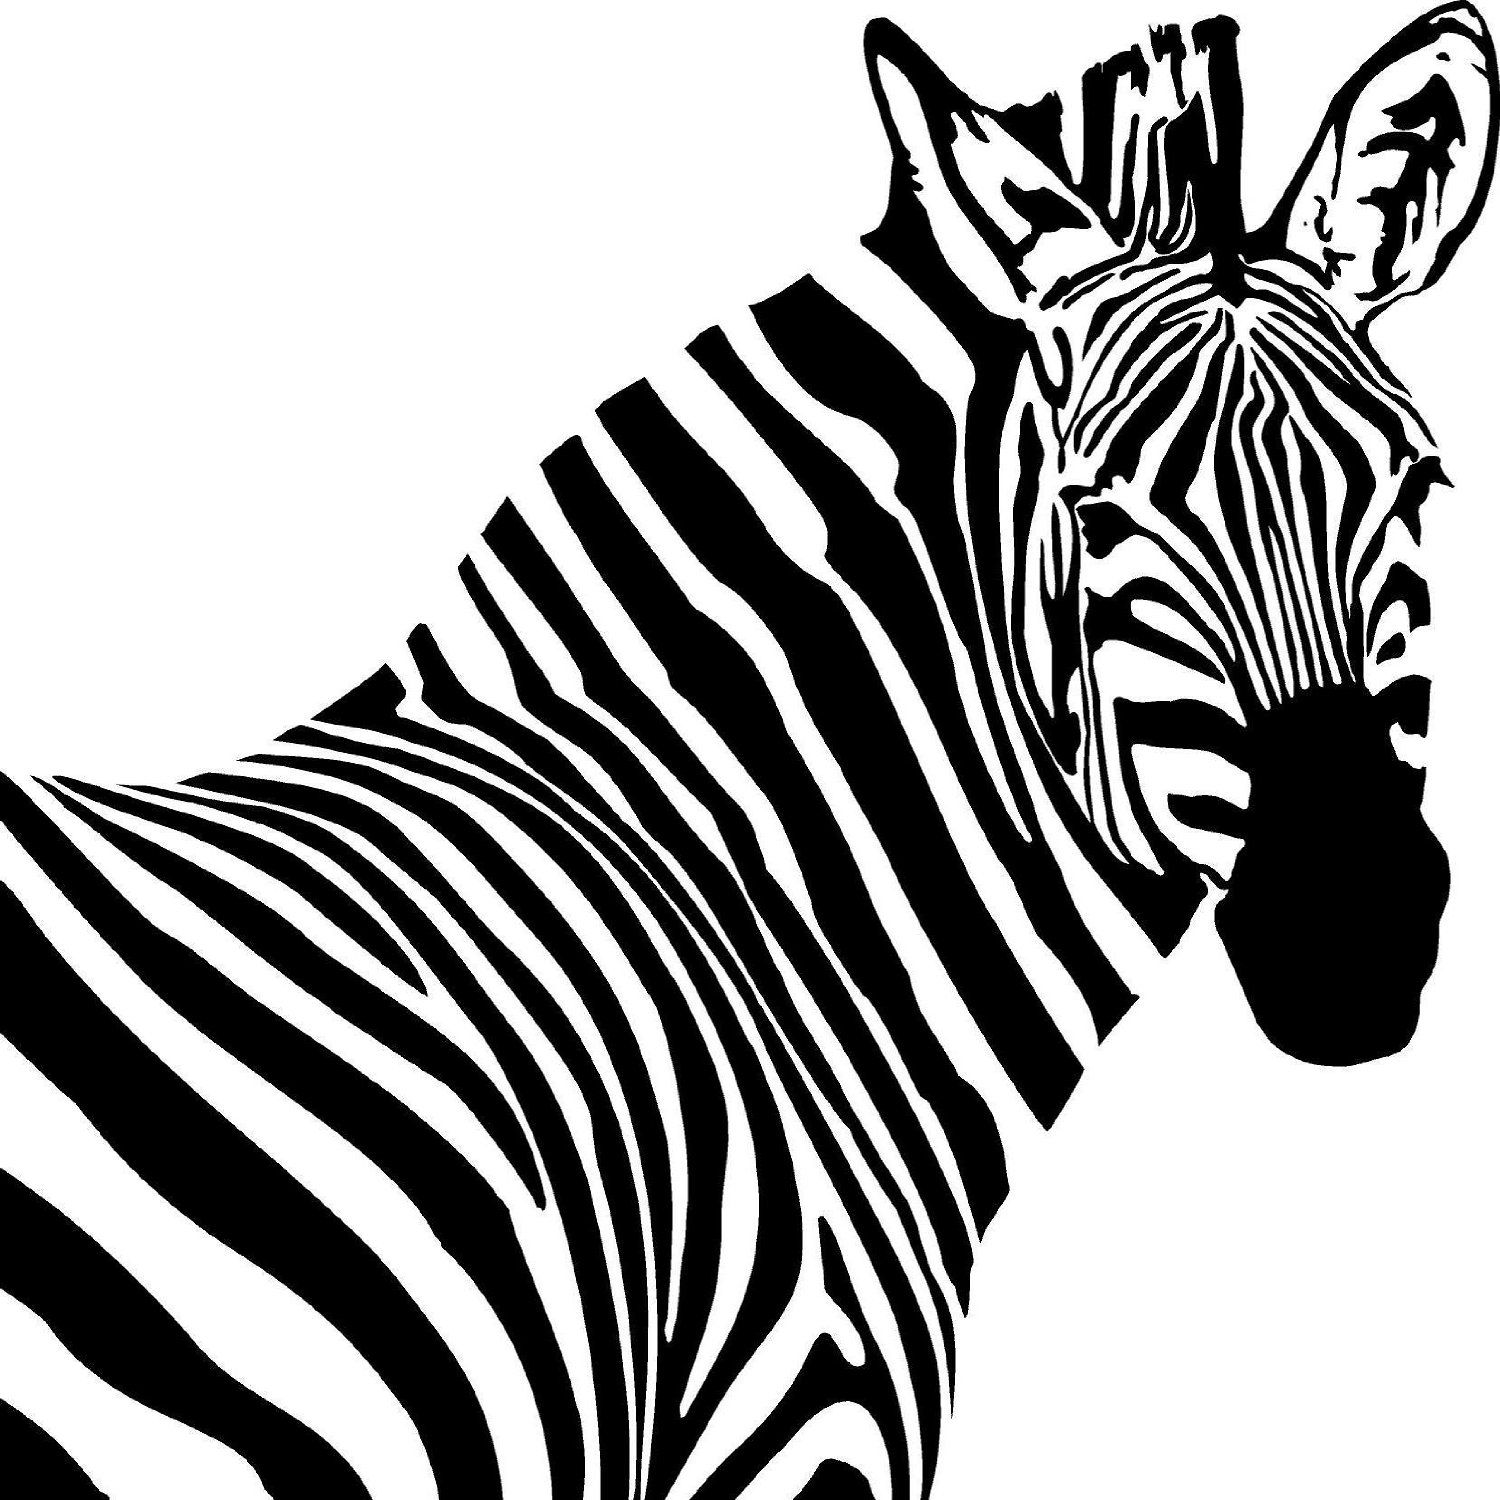 Zebra silhouette google.